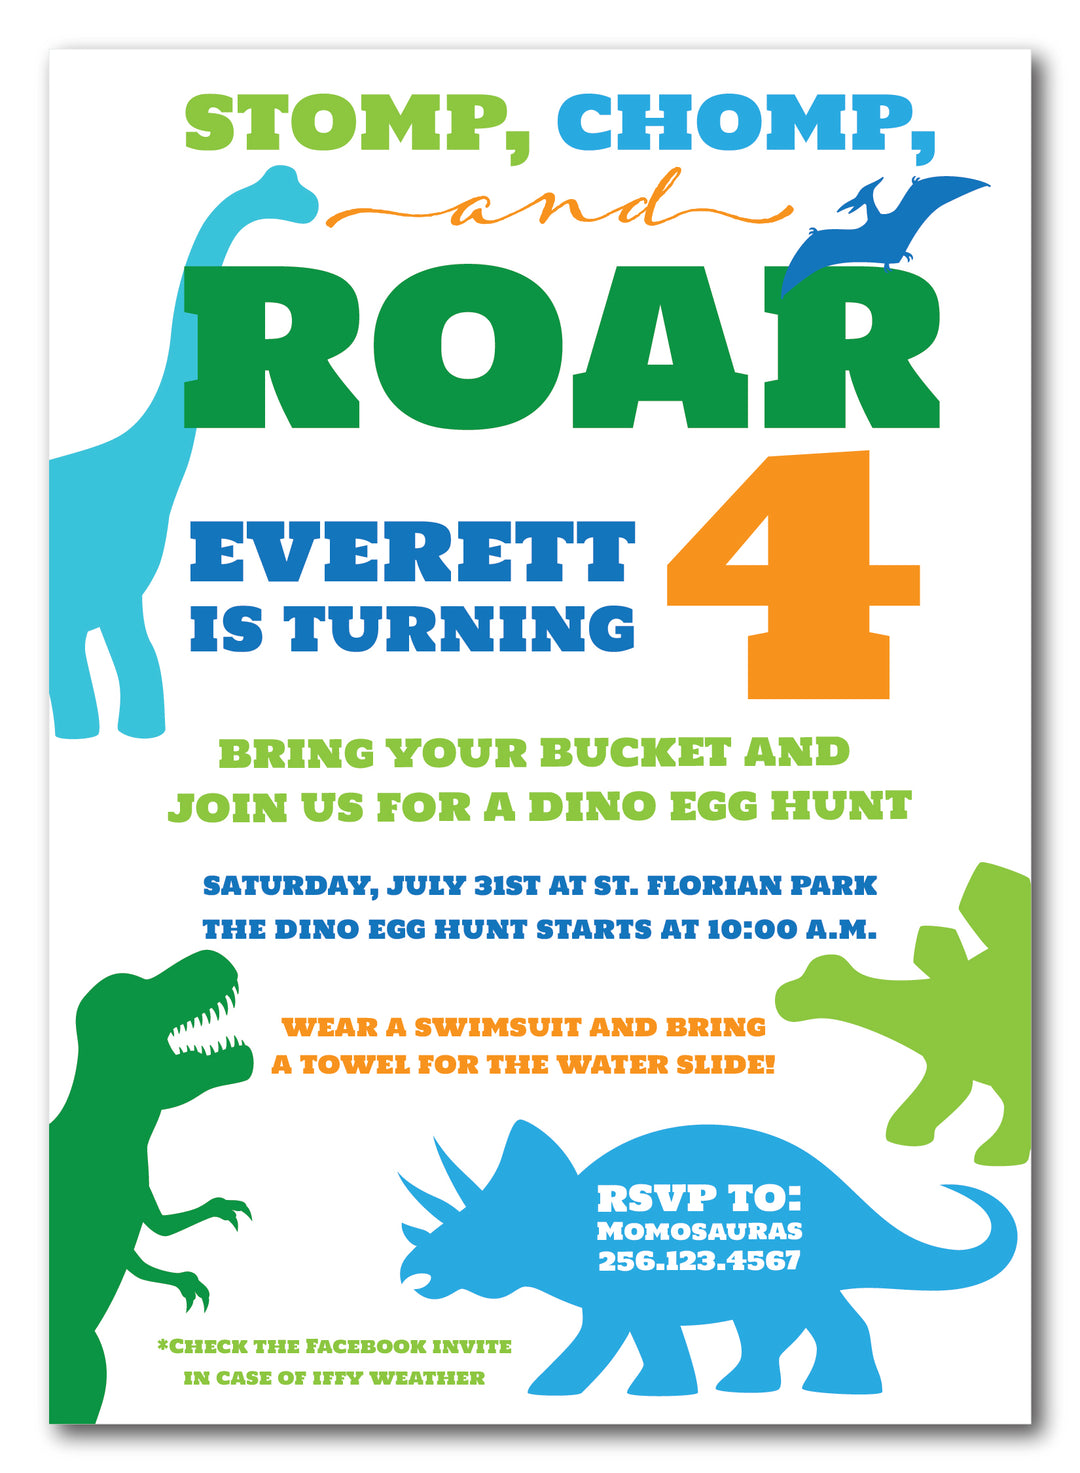 The Dinosaur Birthday Party Invitation